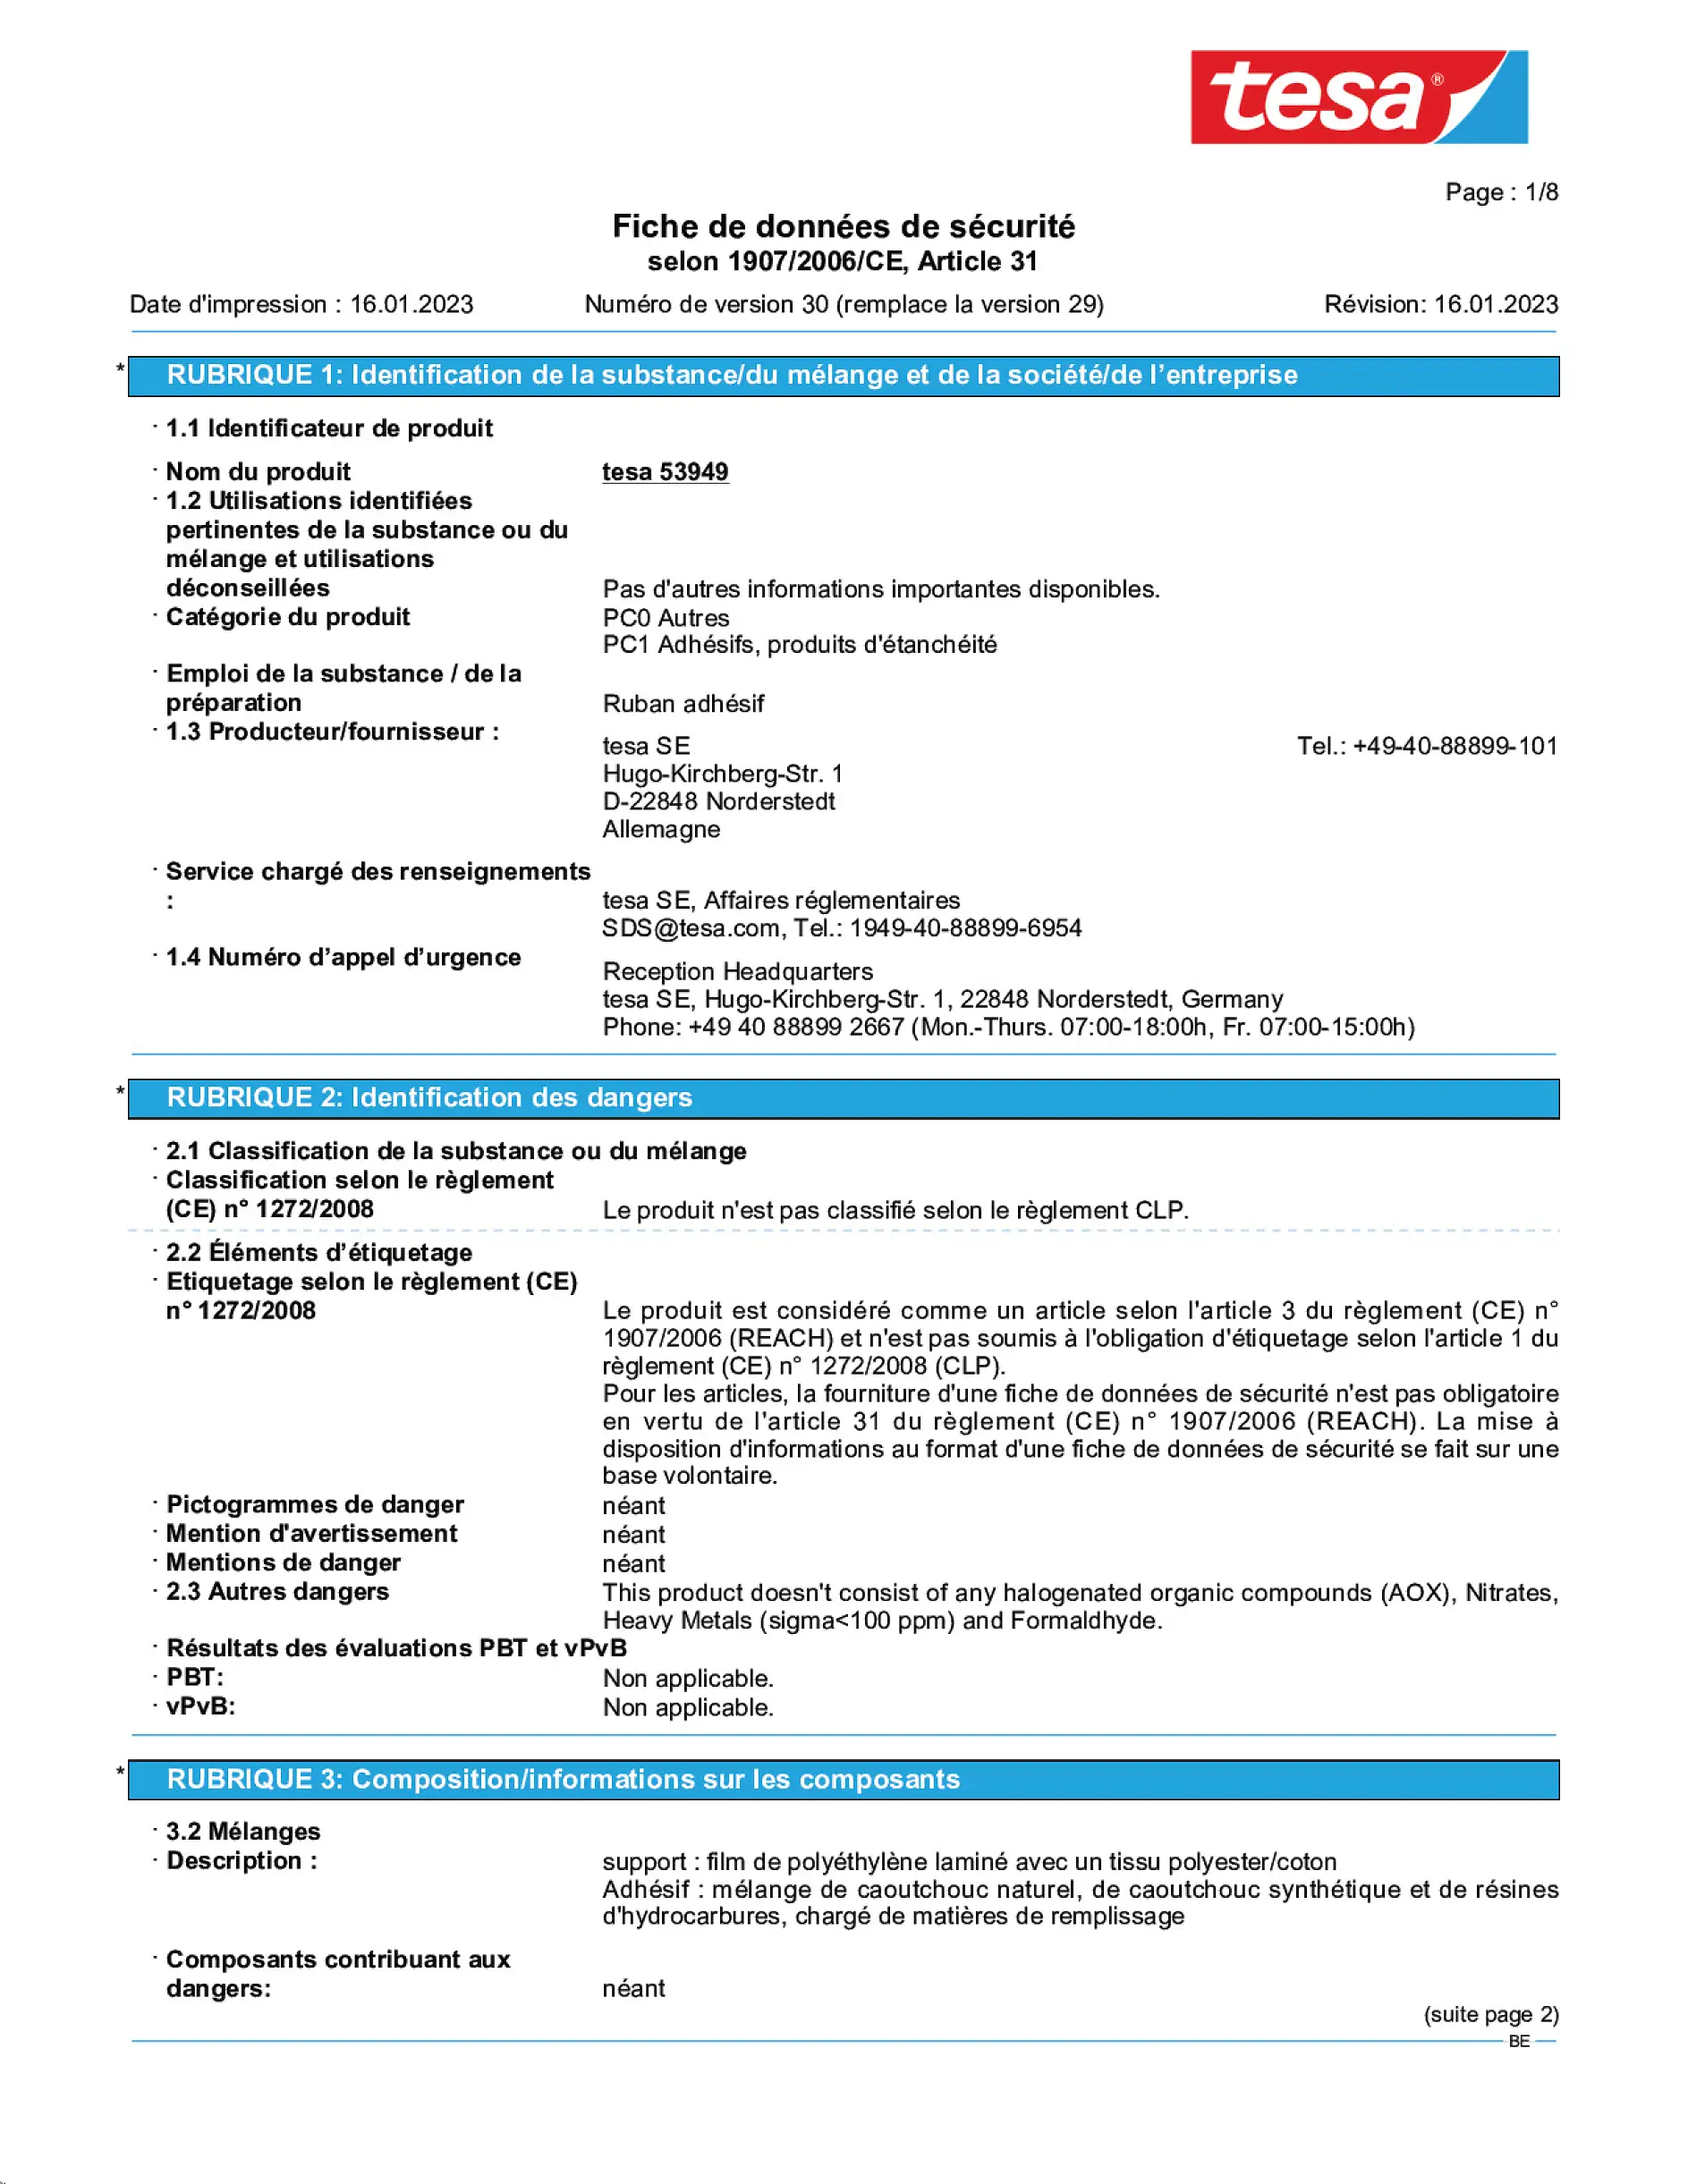 Safety data sheet_tesa® Professional 53949_nl-BE_v30